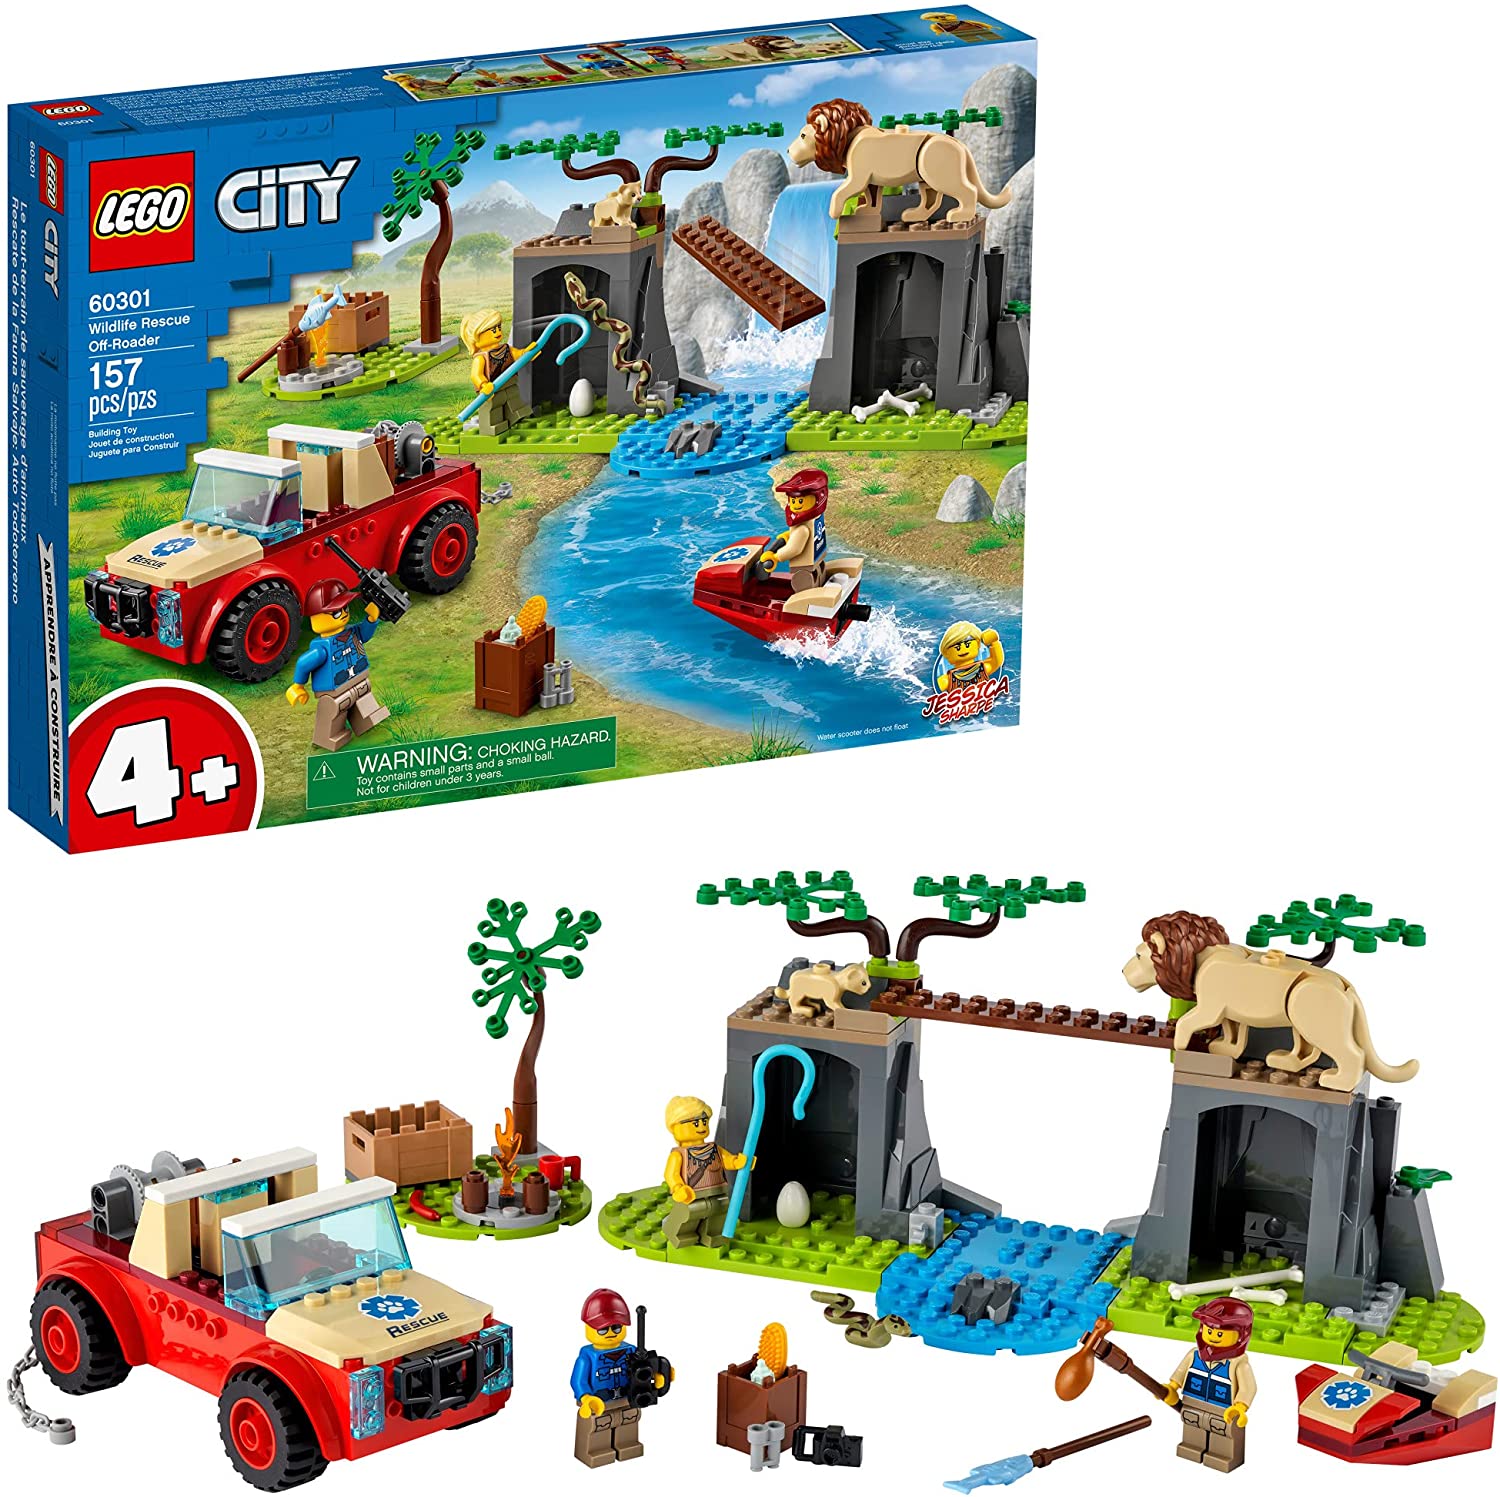 LEGO City Wildlife Off-Roader 60301 Building Includes a